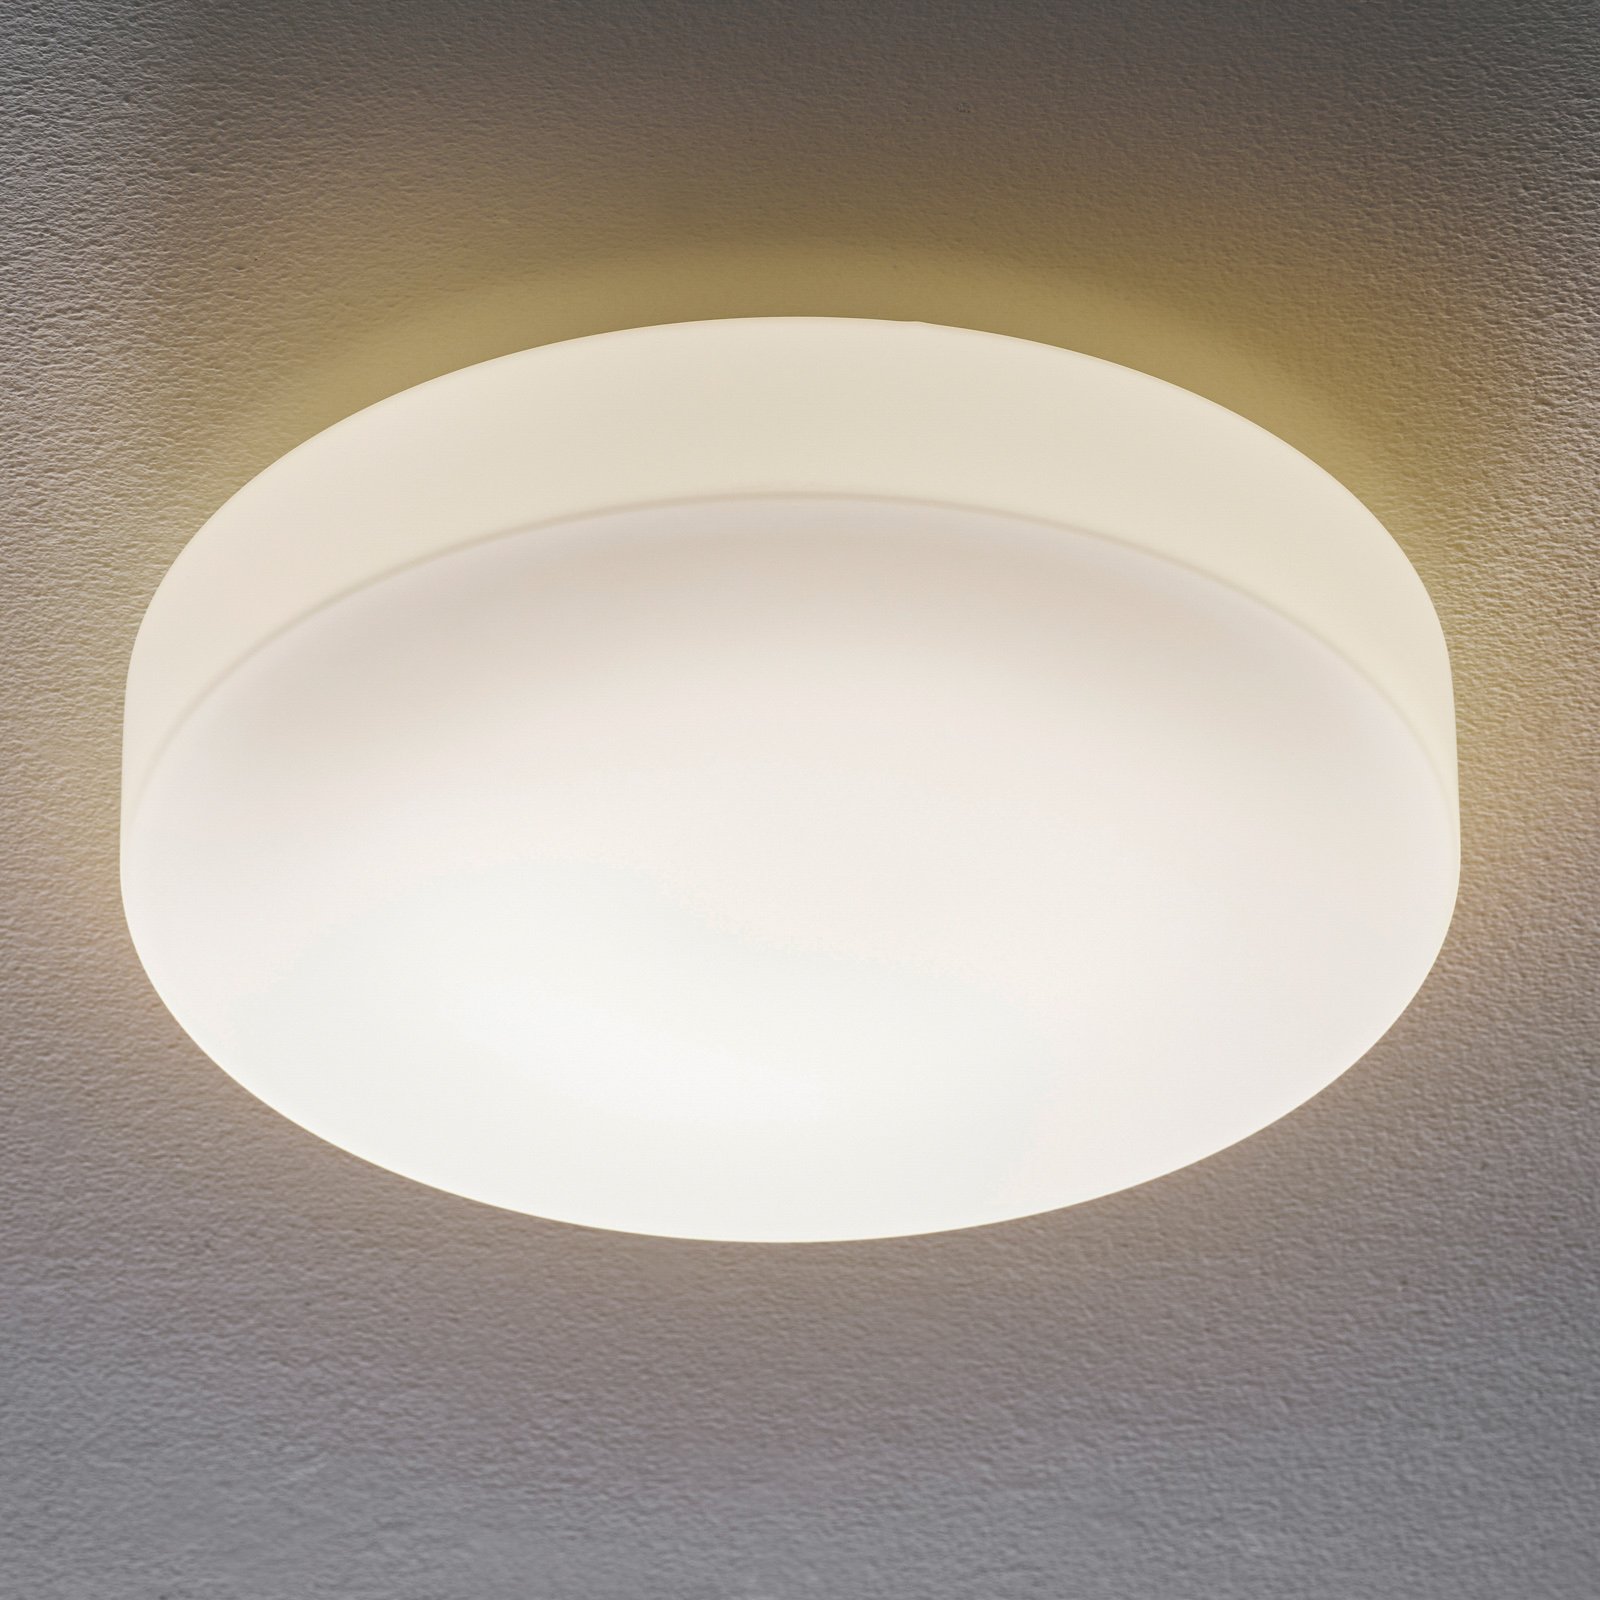 BEGA 50652 lampa sufitowa LED szkło opalowe Ø39cm